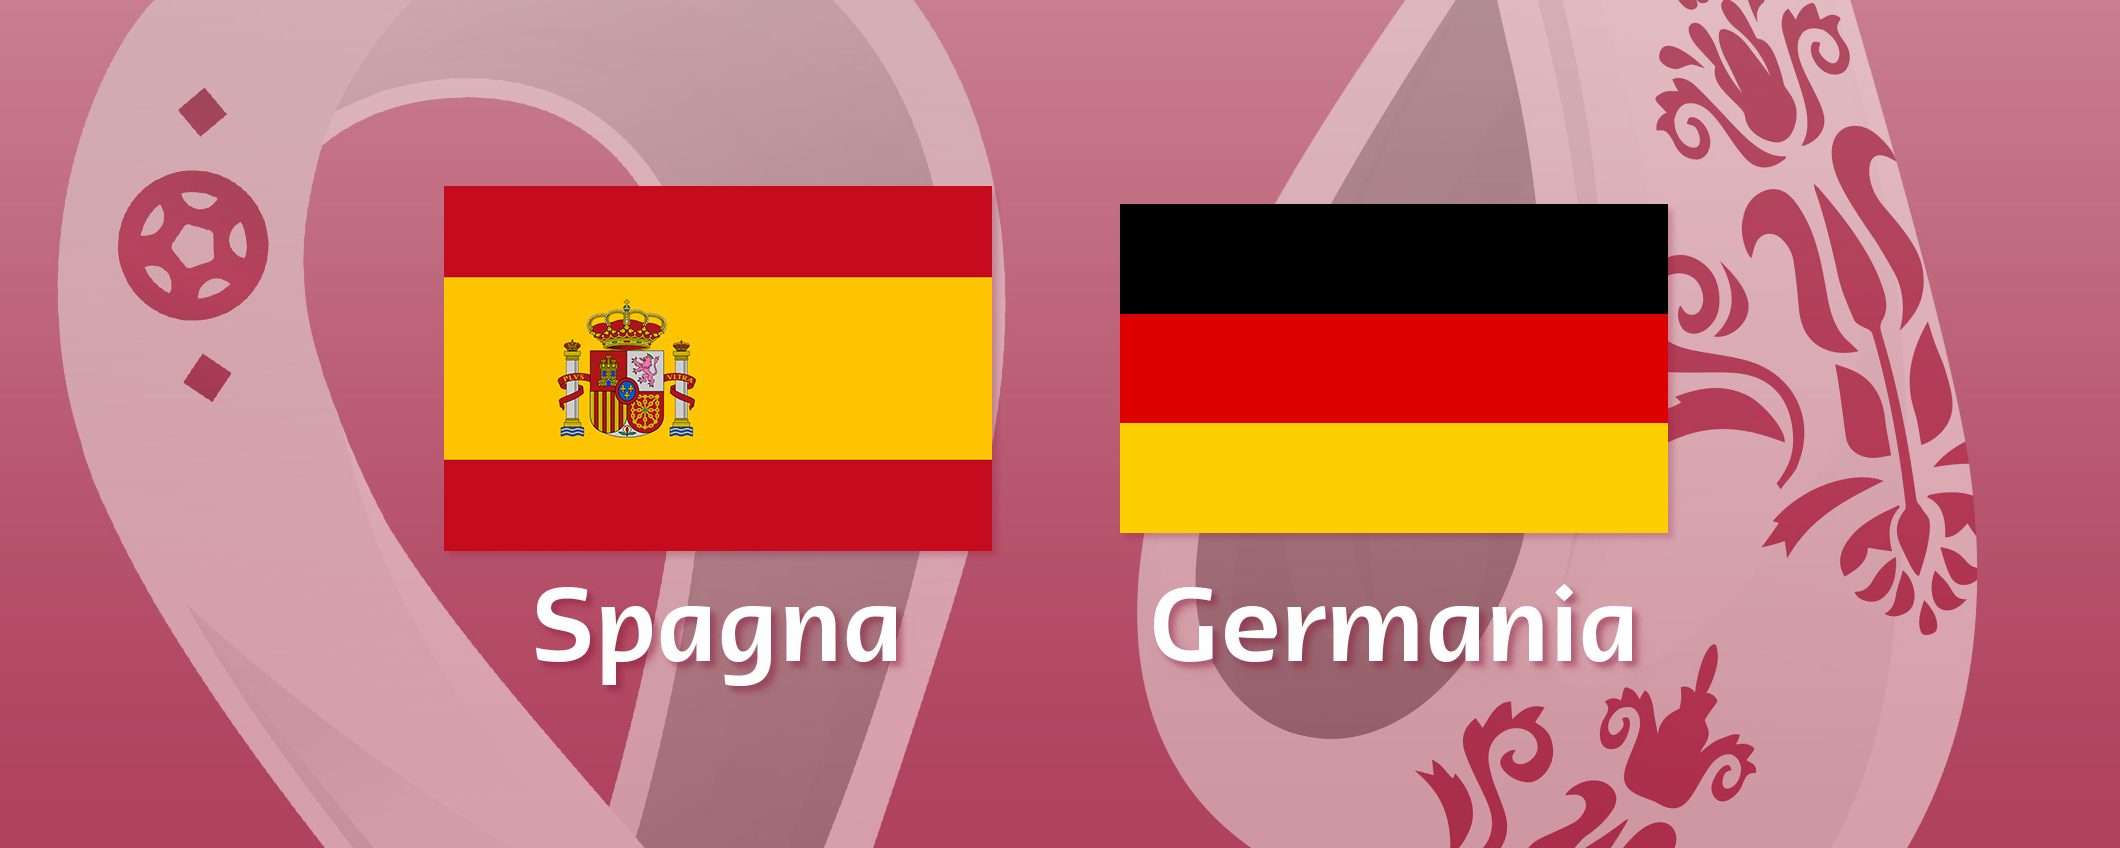 Come vedere Spagna-Germania in streaming